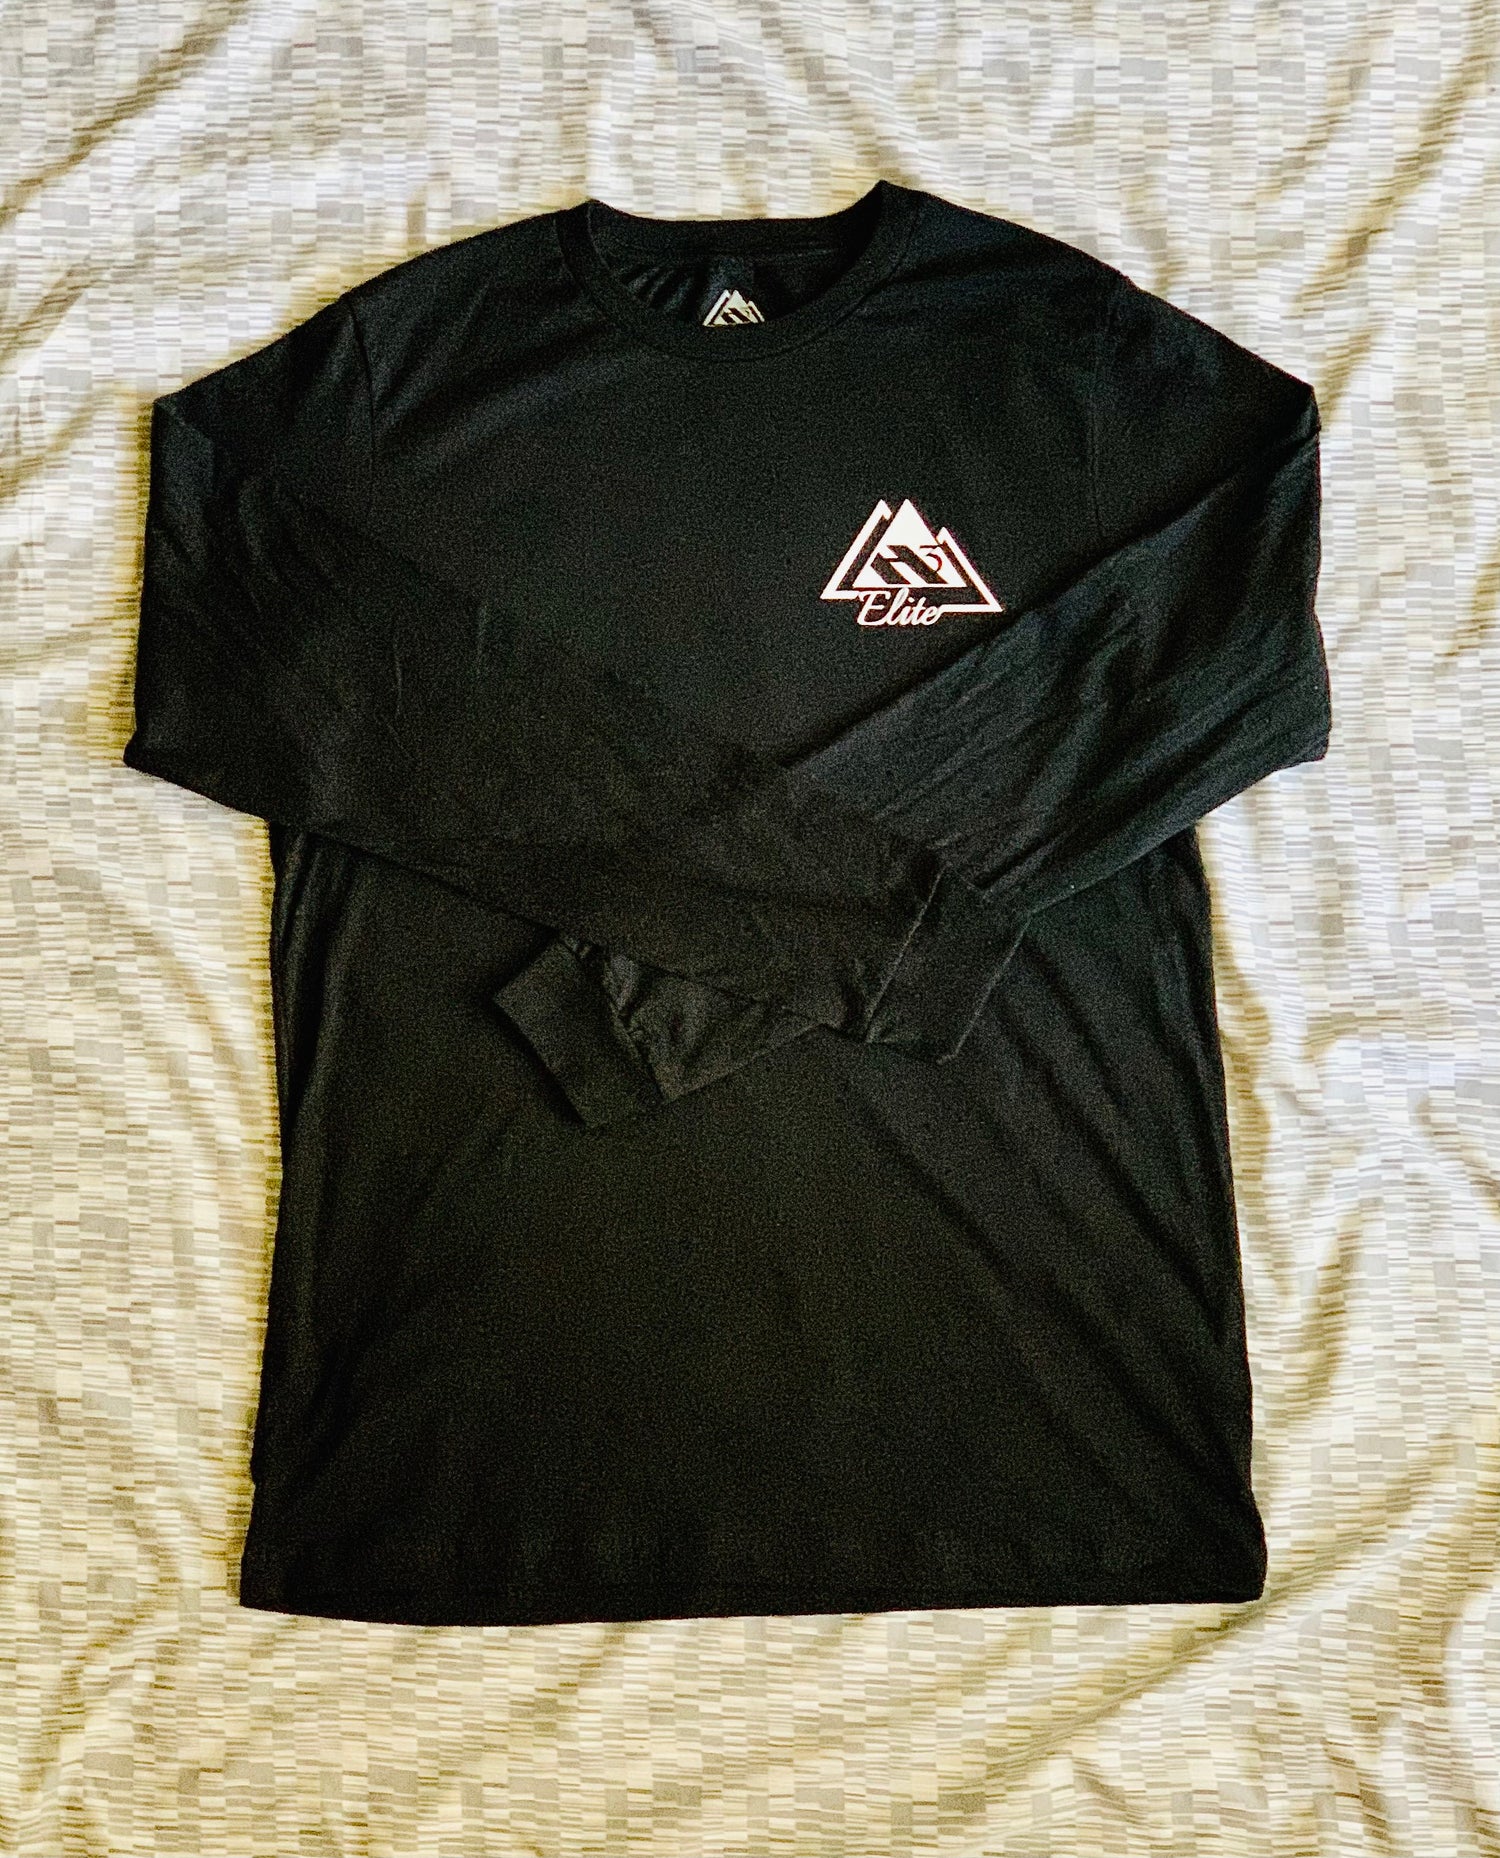 Black "Elite Onset" long sleeve t-shirt with white logo (front)